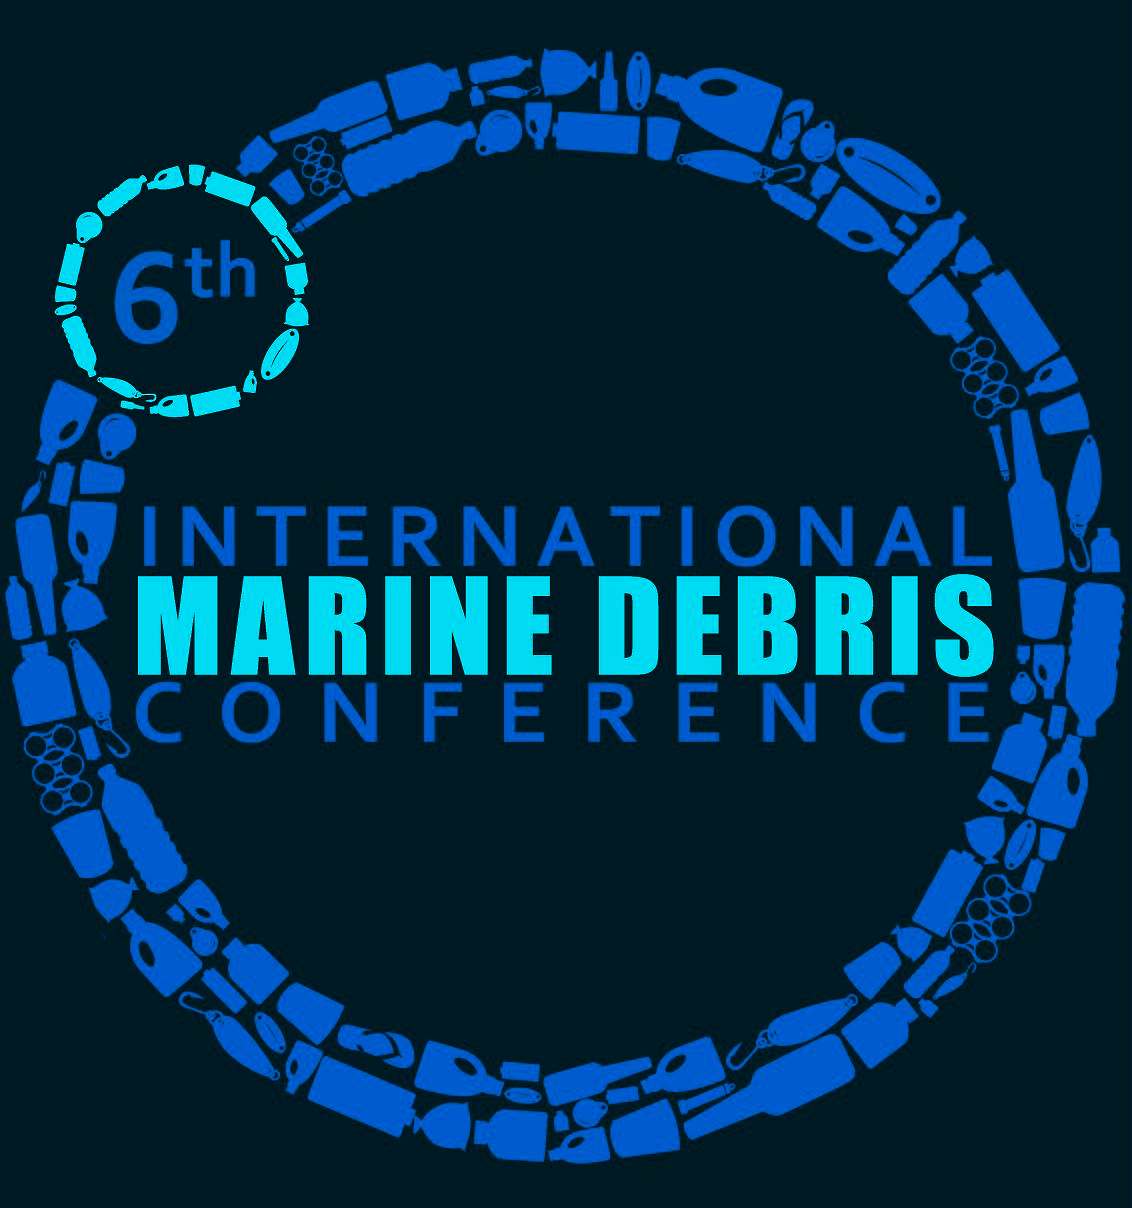 Marine debris conference 12 March 2018, San Diego